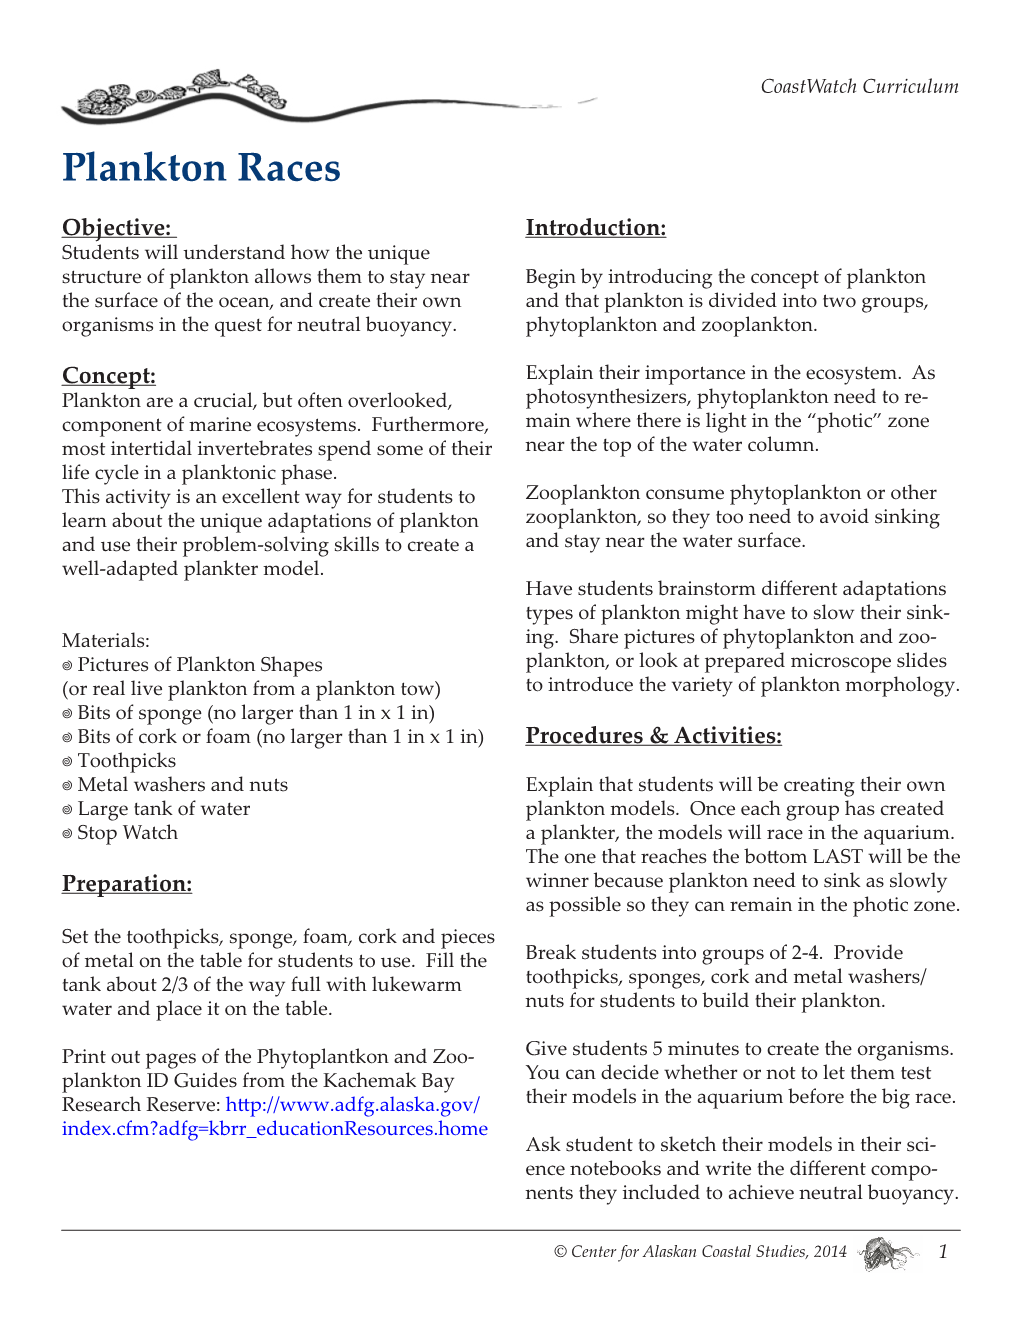 Plankton Races